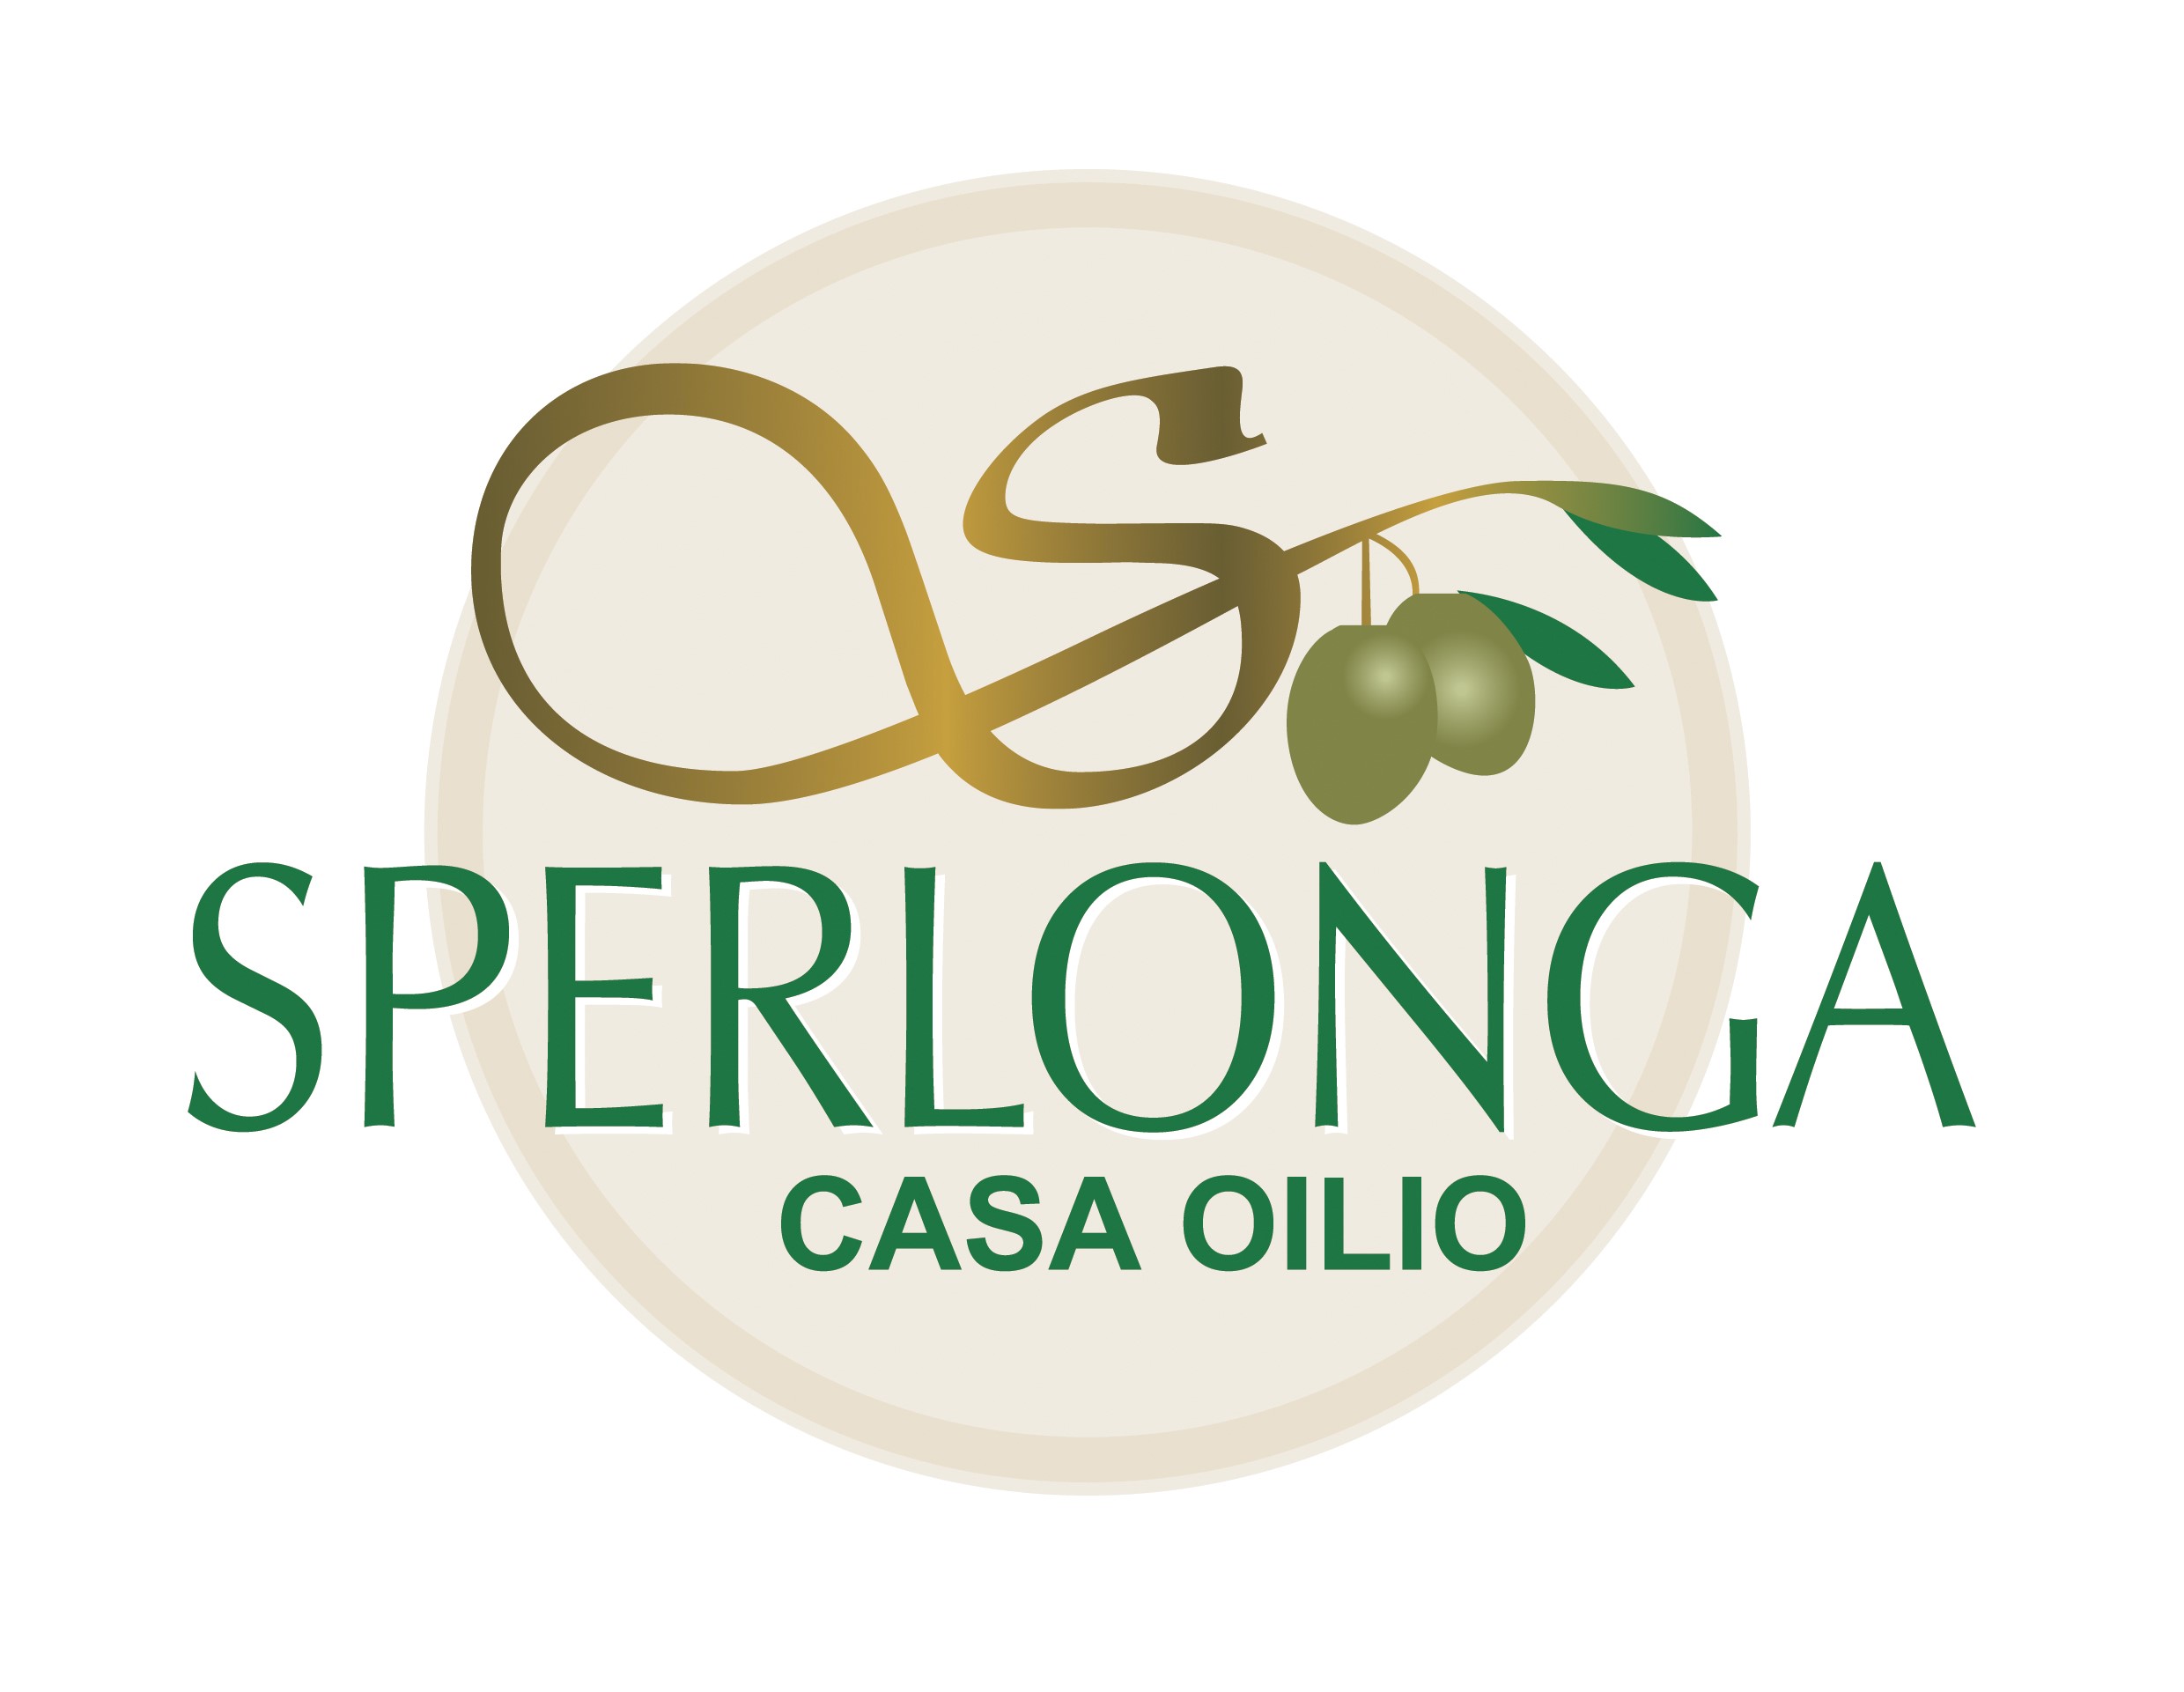 Casa Oilio Sperlonga Spa - Alimentare